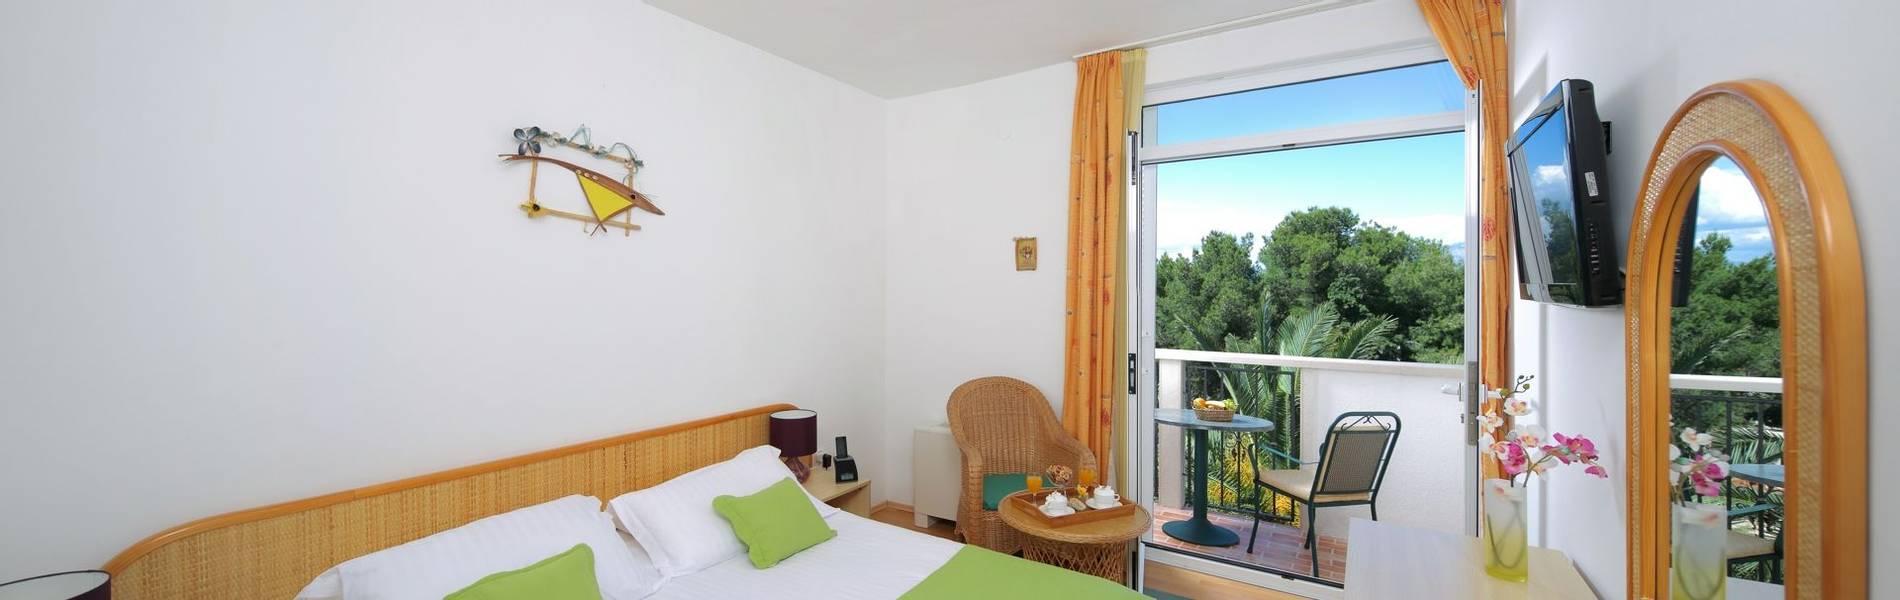 Hotel Villa ADRIATICA 2014 ZSuperior Double Room 9X19 panorama 14MB.jpg